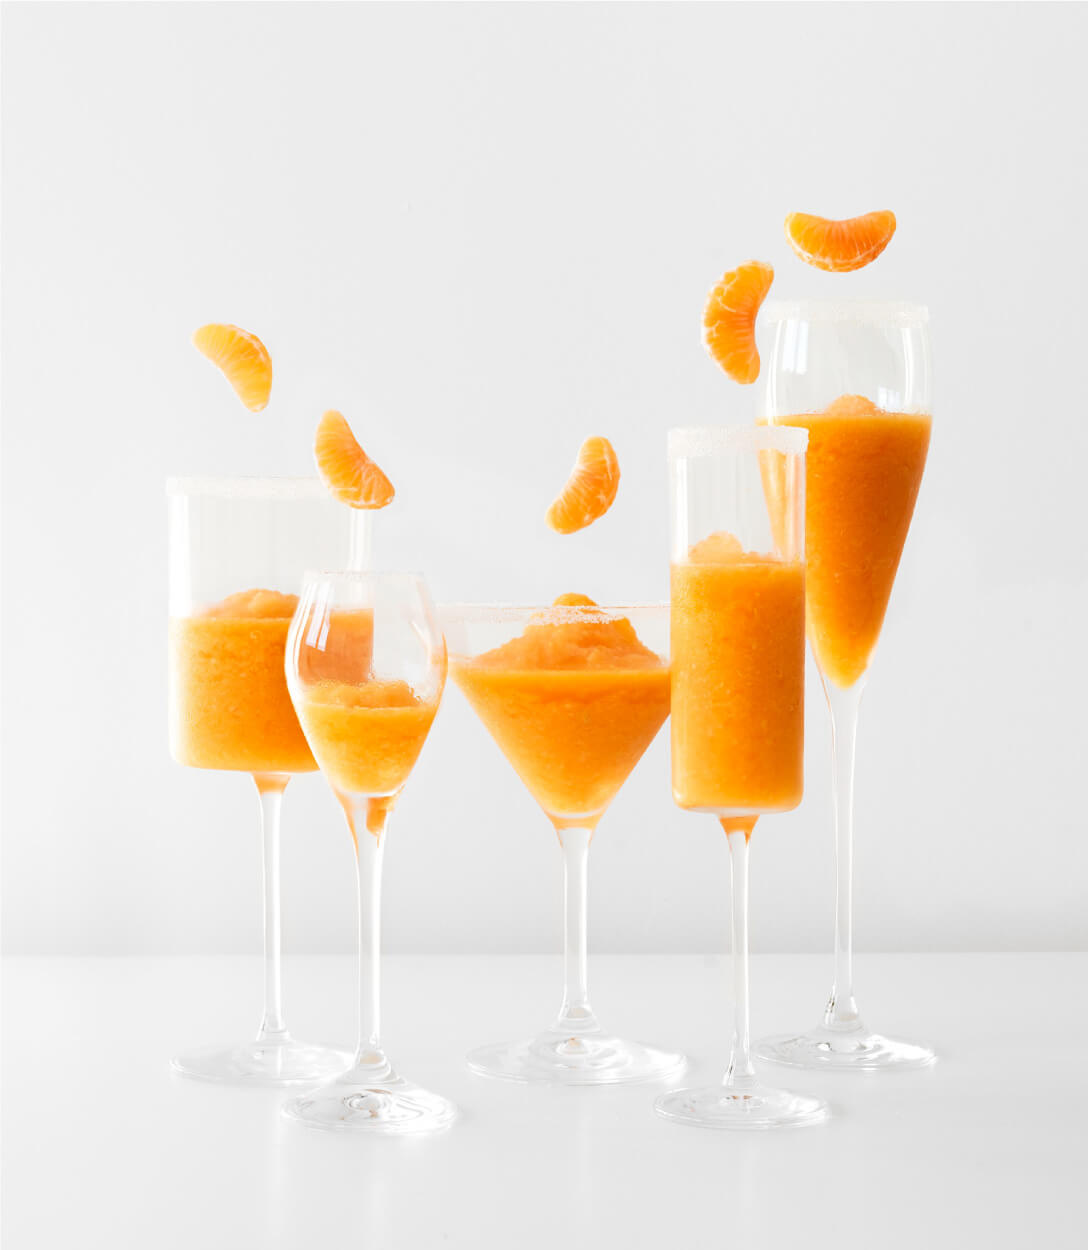 Bodegón de 5 copas con zumo de mandarina mientras al vuelo caen gajos de mandarina